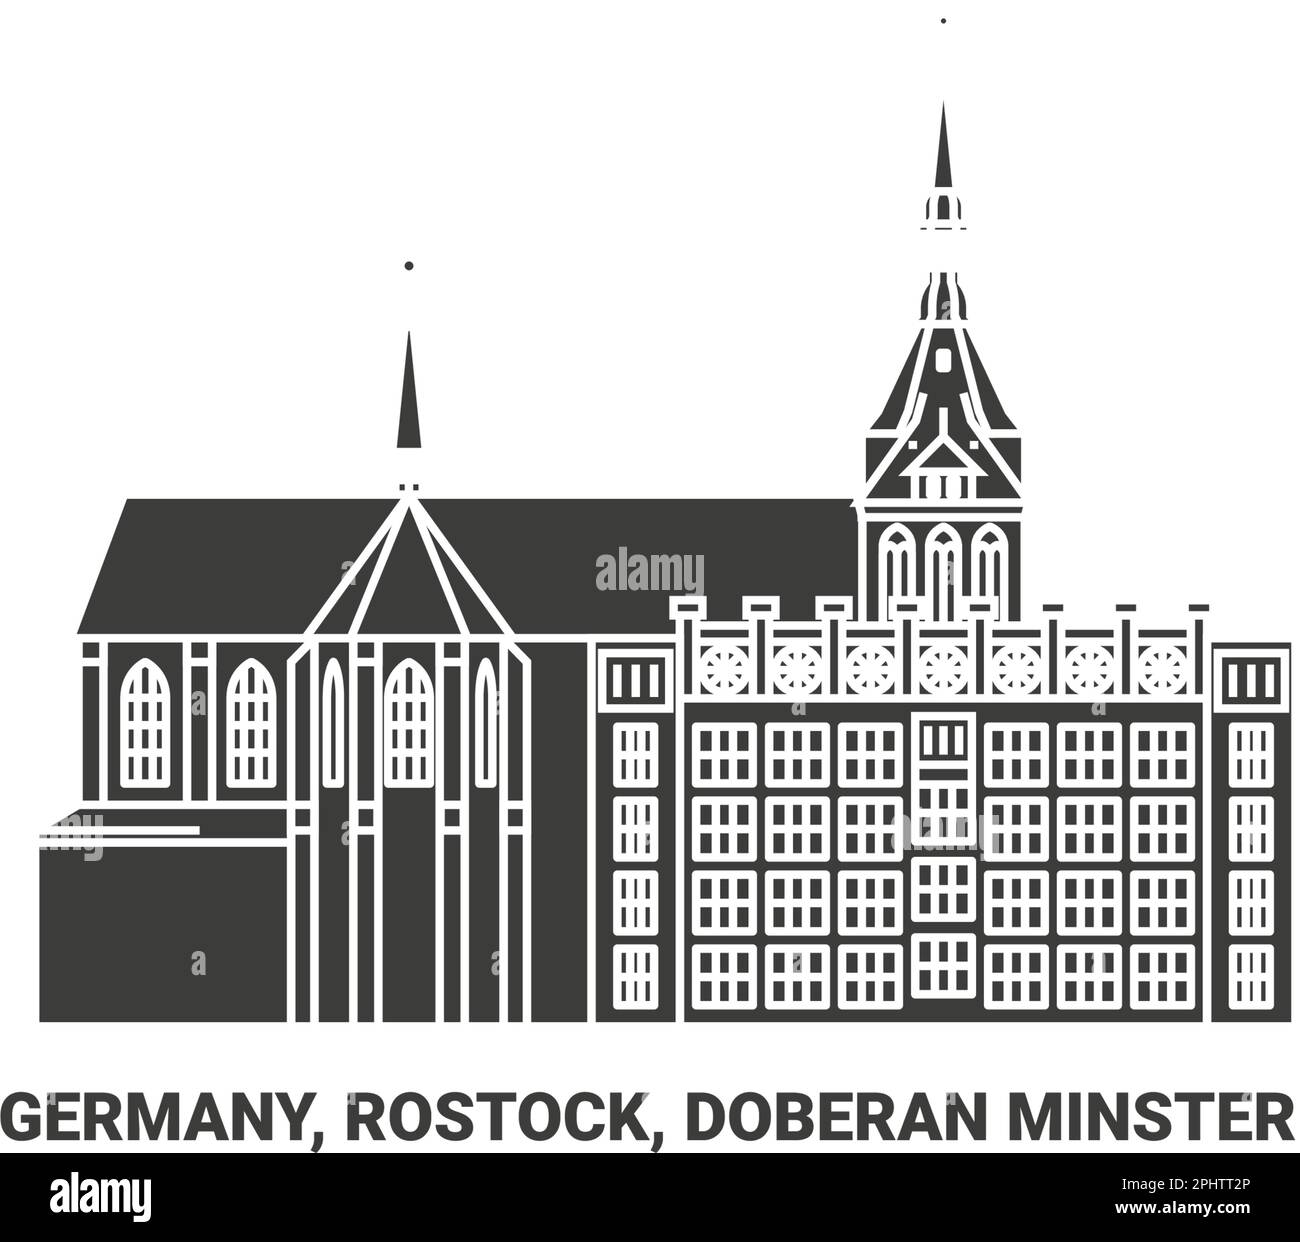 Deutschland, Rostock, Doberan Minster reisen als Vektorbild Stock Vektor